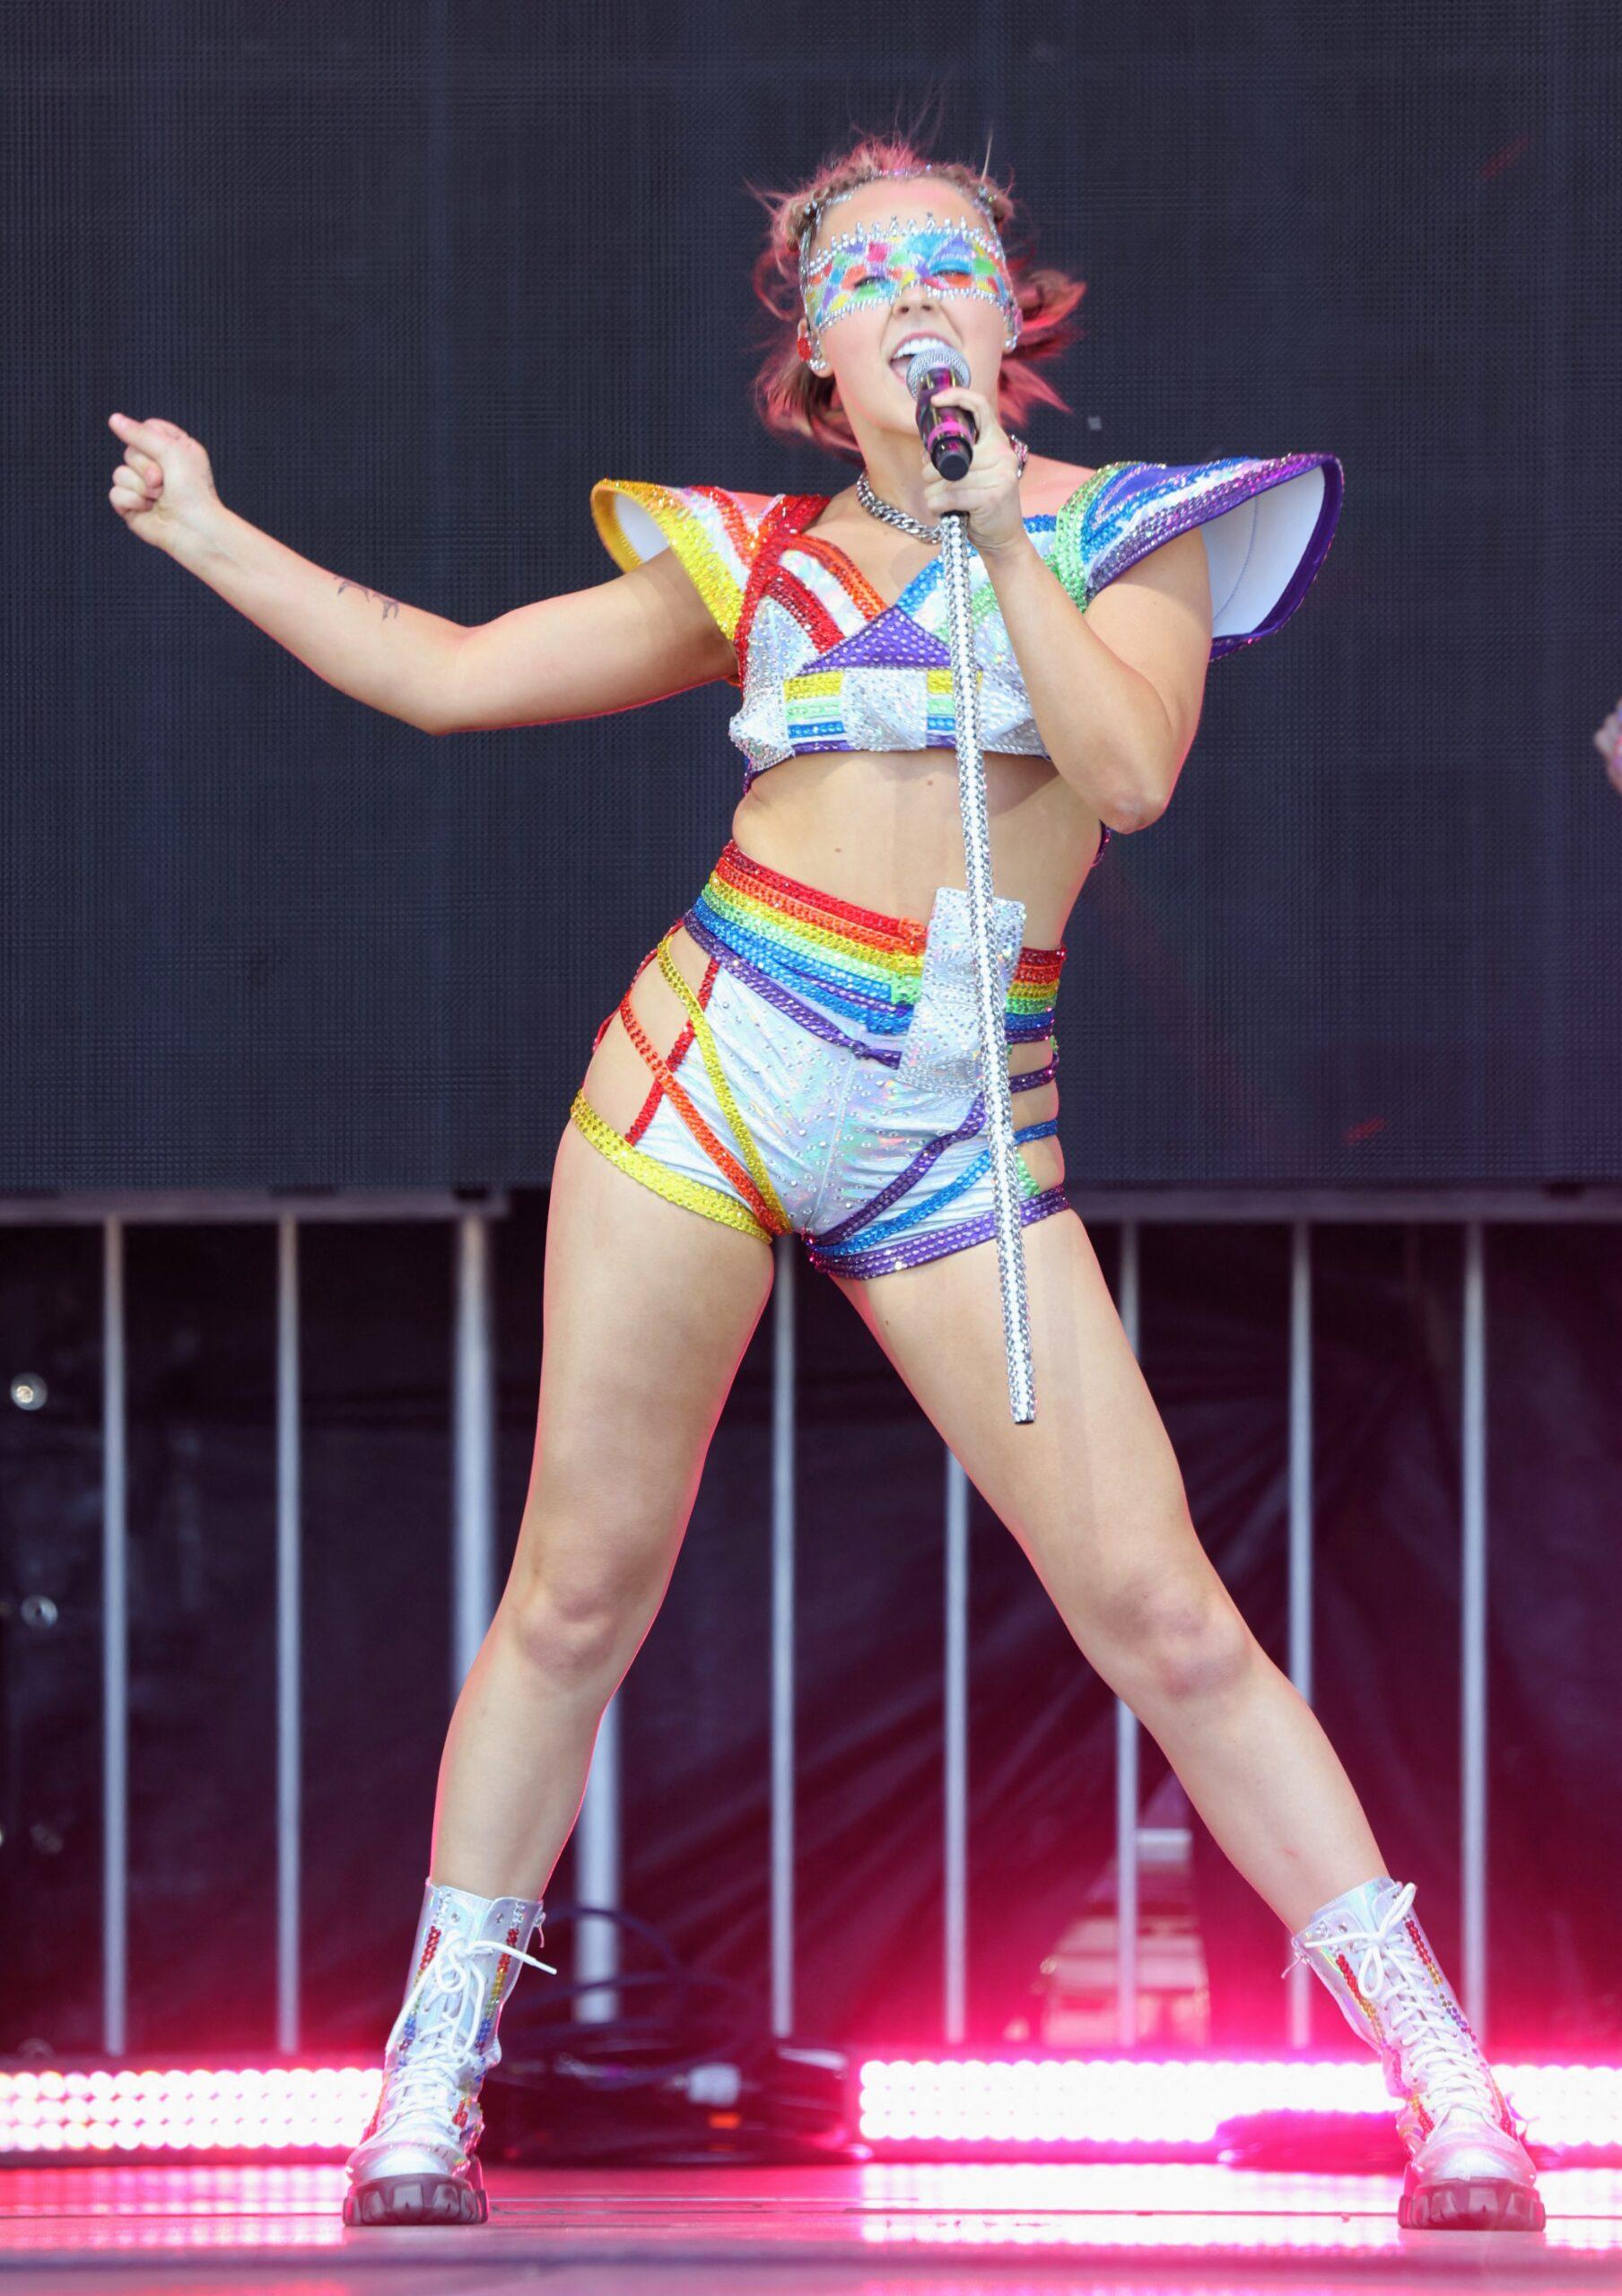 JoJo Siwa performing at the Los Angeles Gay Pride celebration